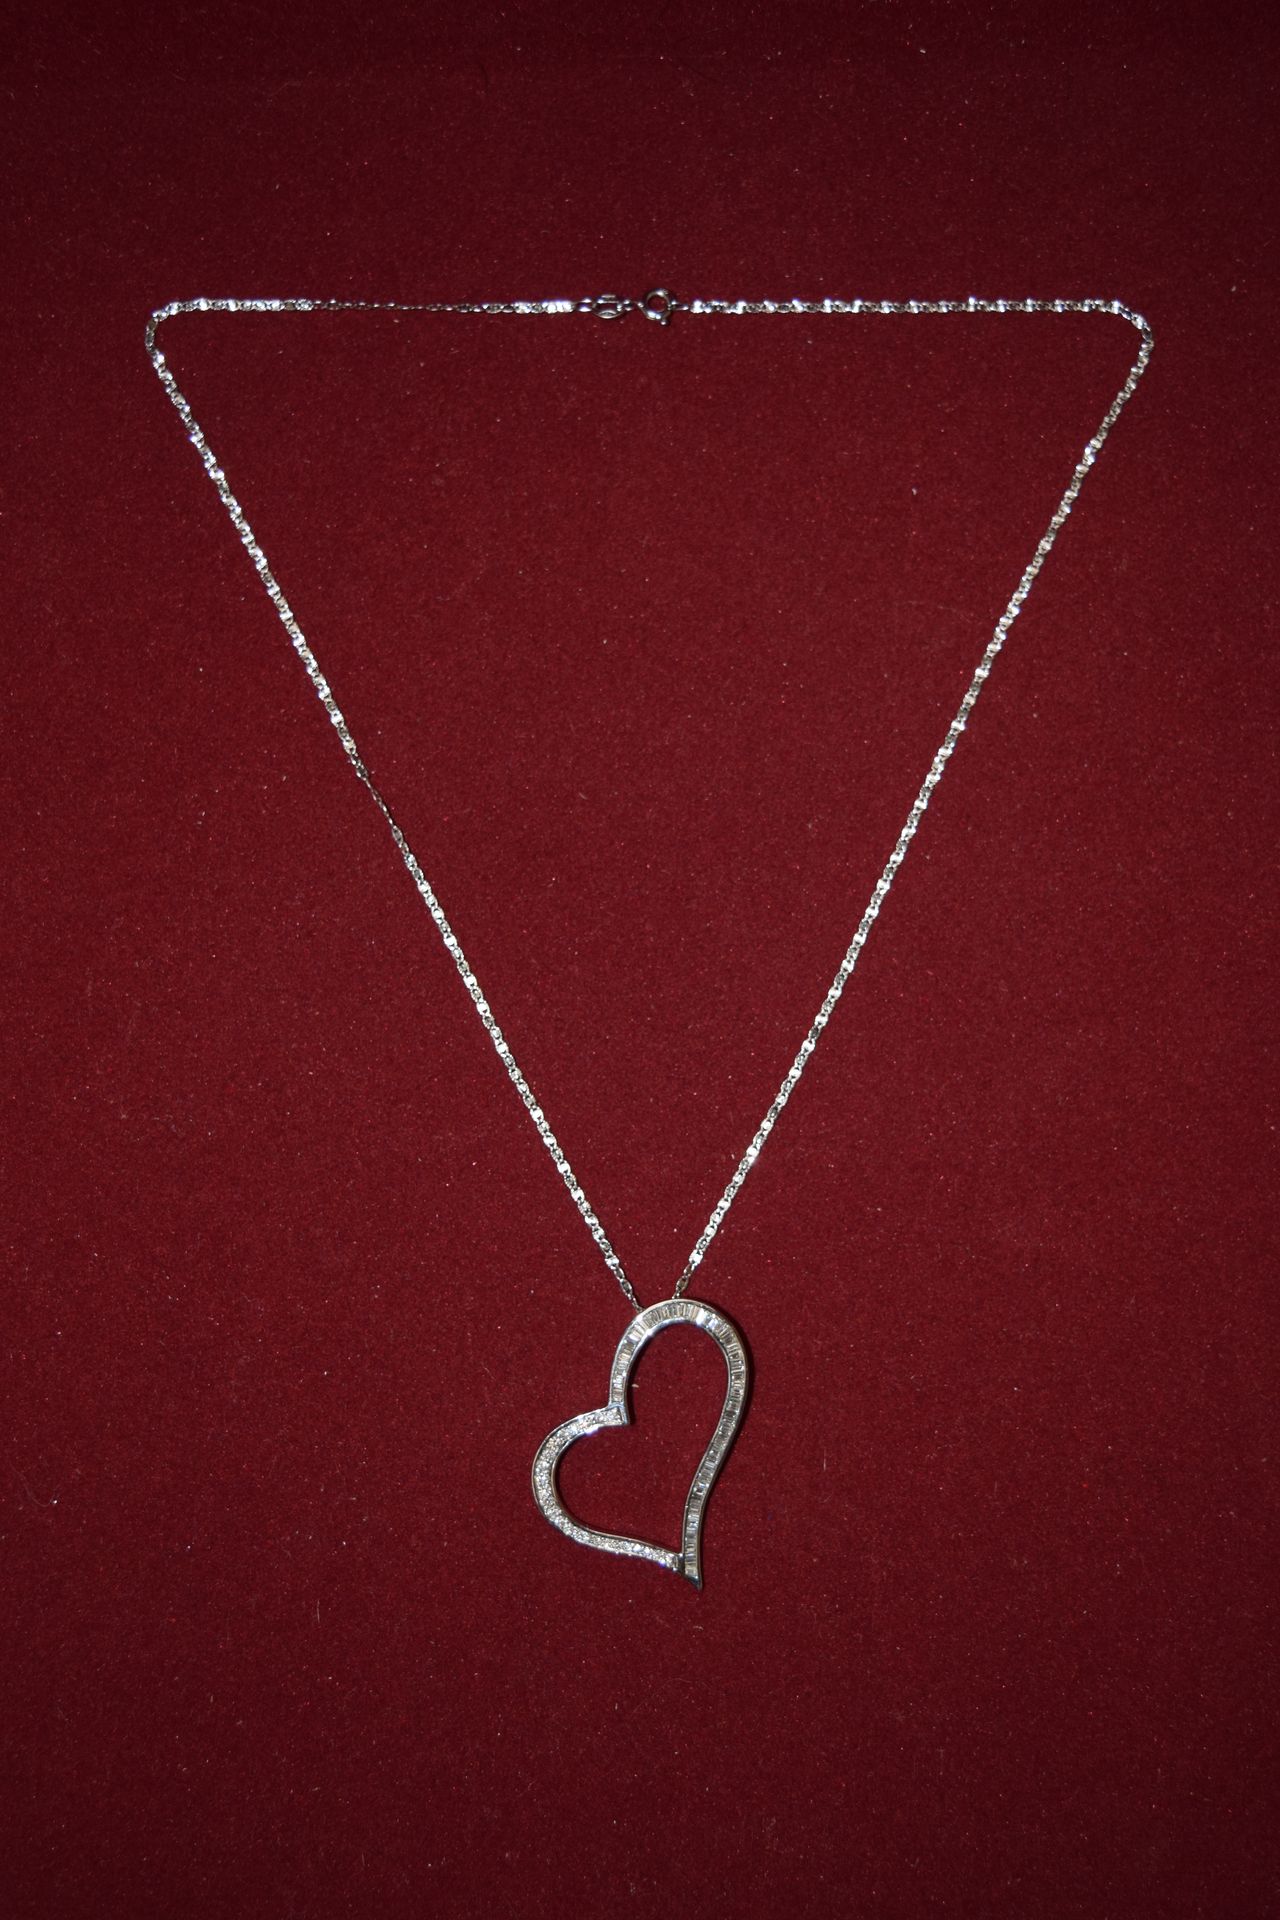 Null 心形吊坠 - 带项链 - 18K白金 - 含约2克拉钻石（巴盖特式切割）。